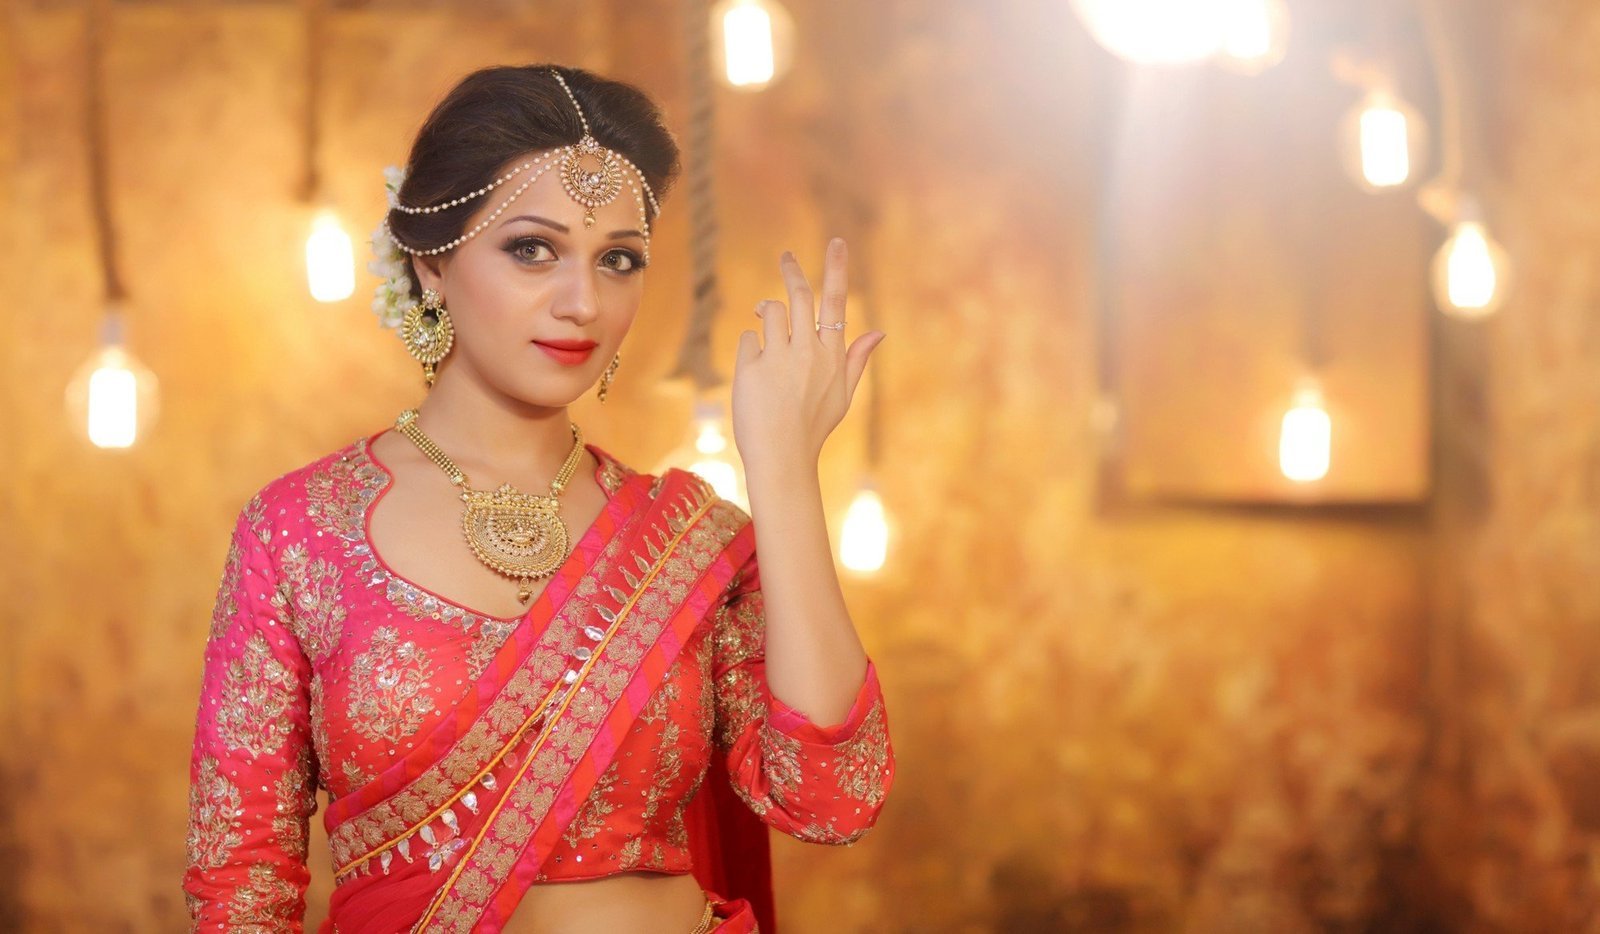 Actress Reshma Rathore in Saree Traditional Photoshoot | Picture 1524340